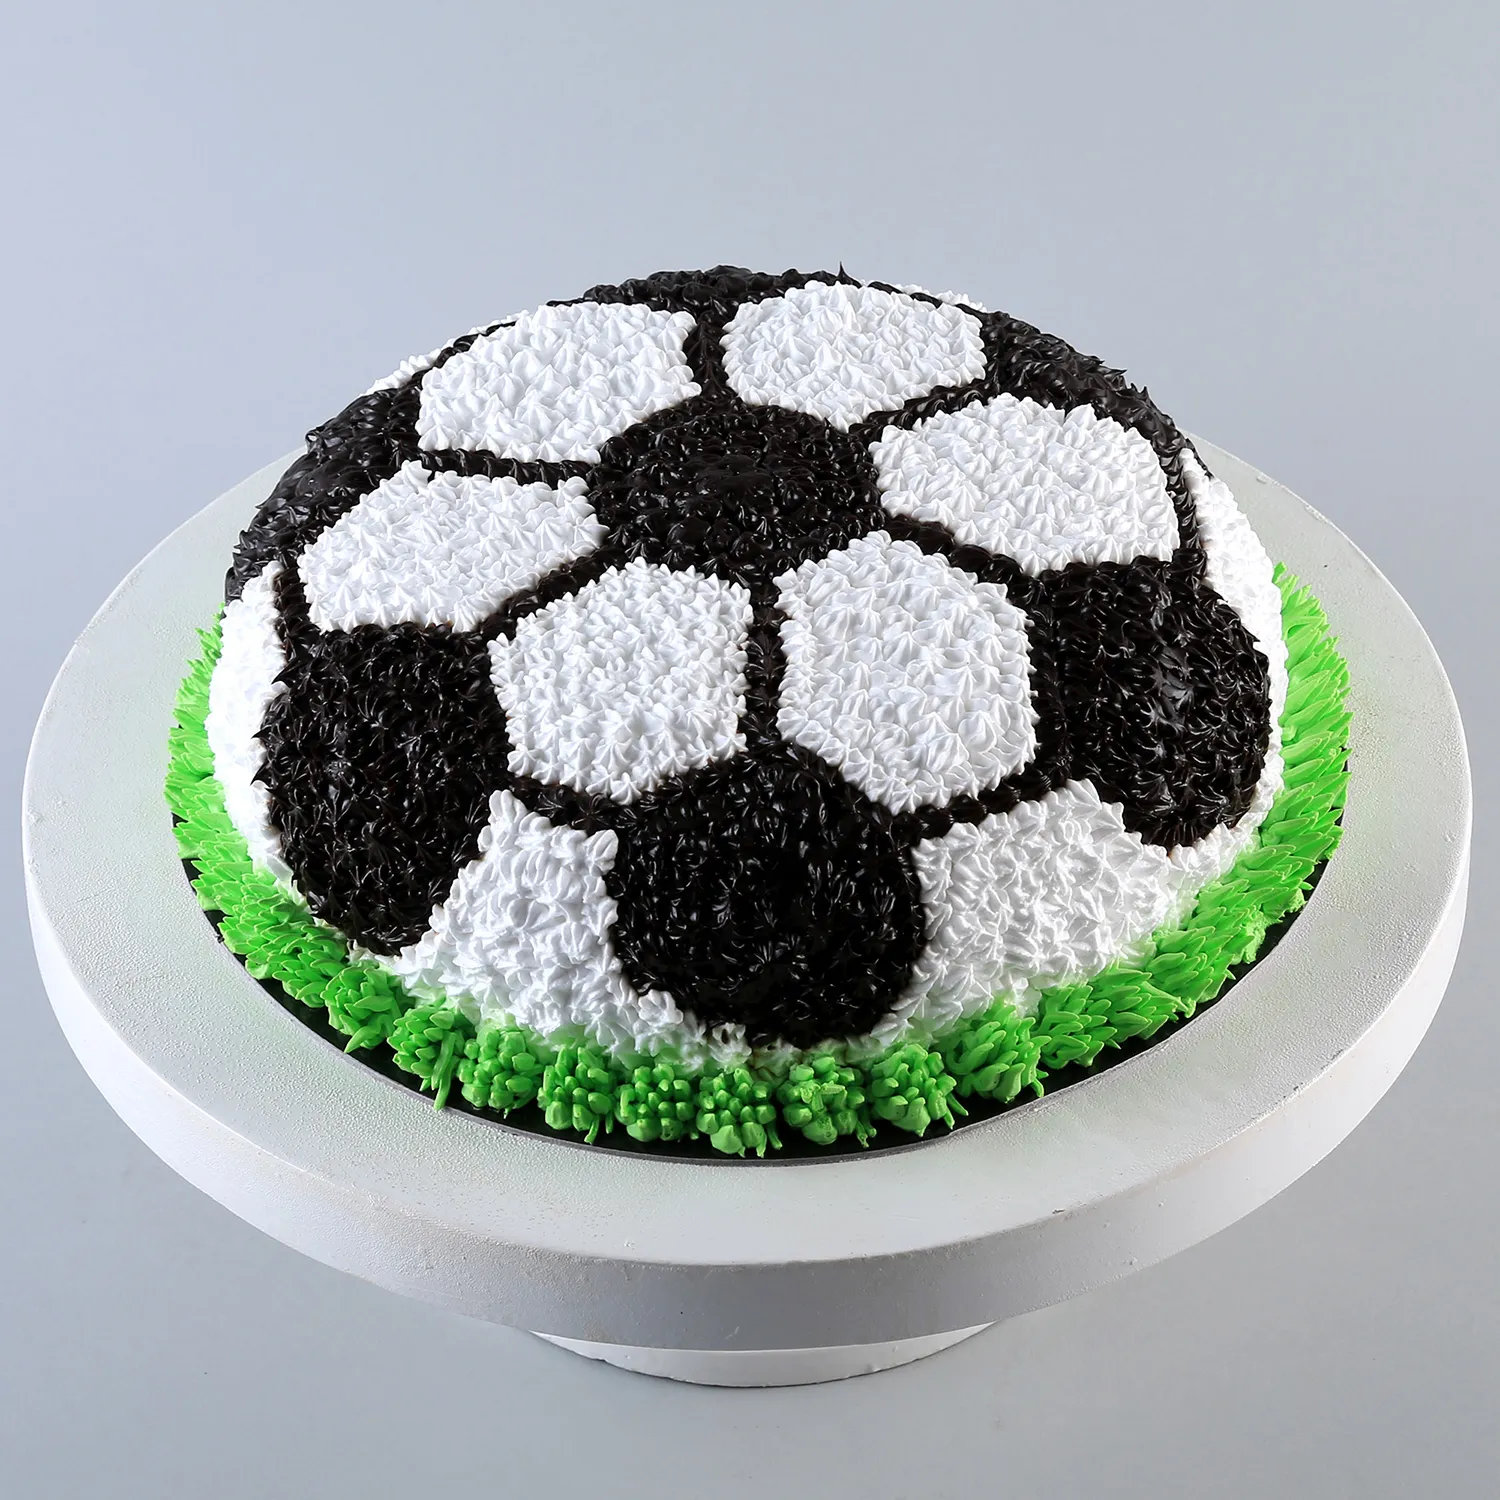 Football Theme Chocolate Cake - 1 KG